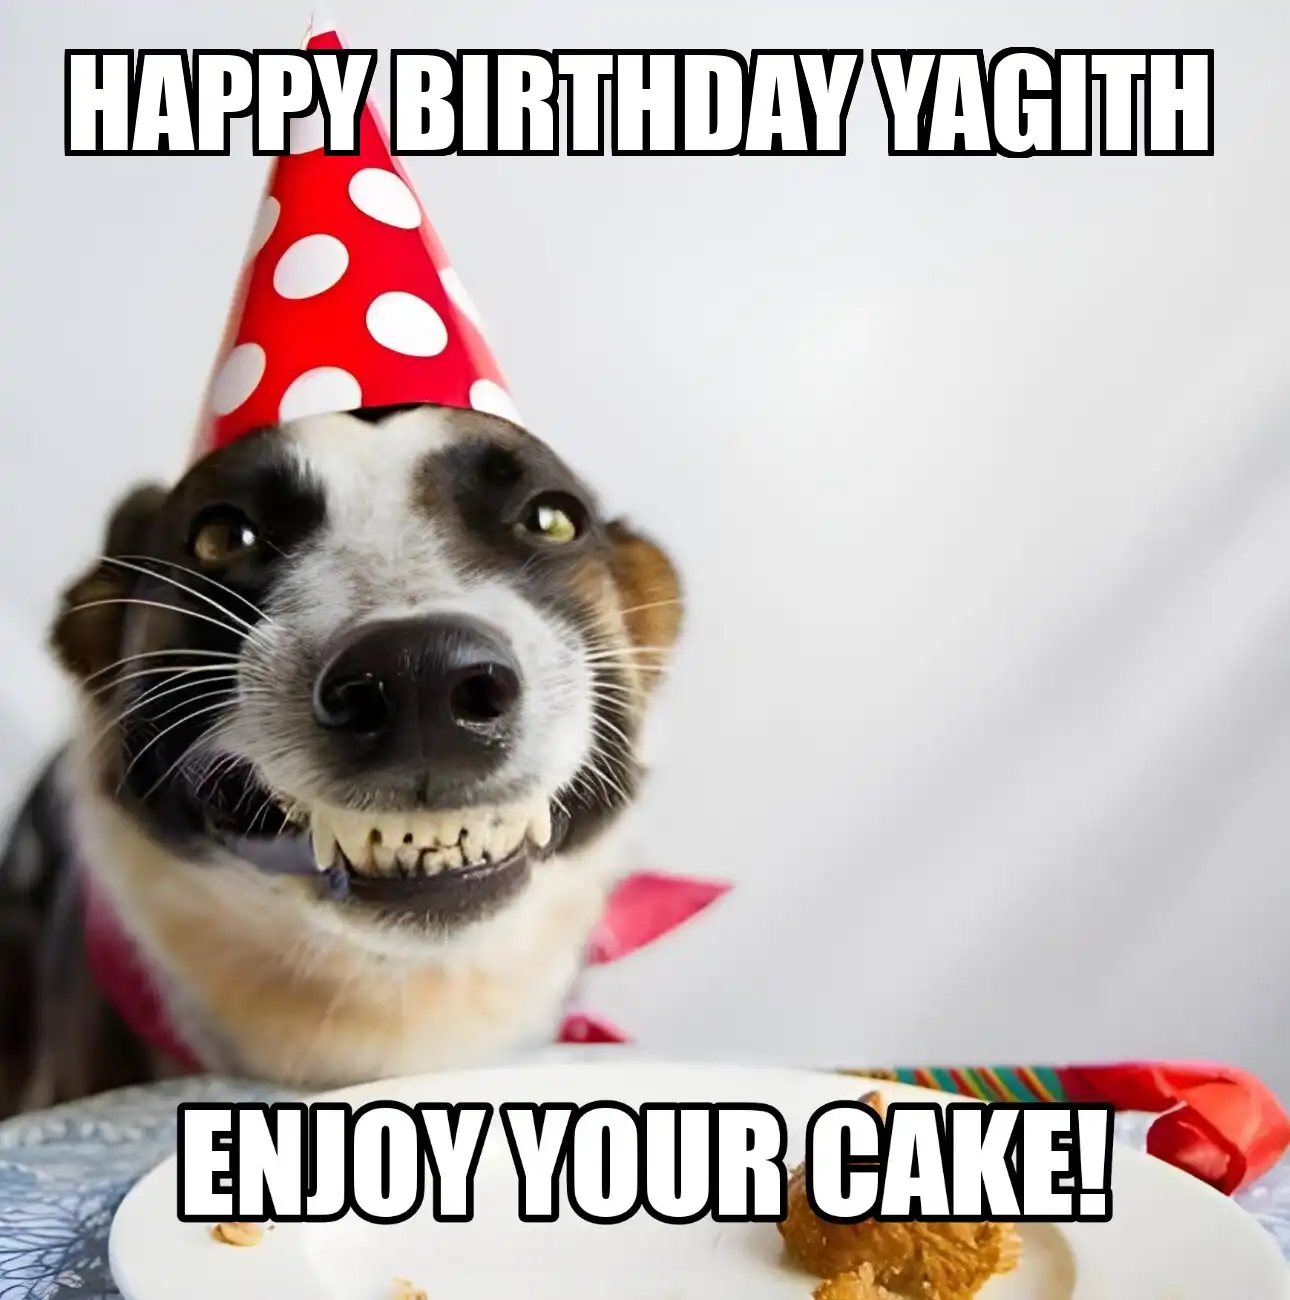 Happy Birthday Yagith Enjoy Your Cake Dog Meme